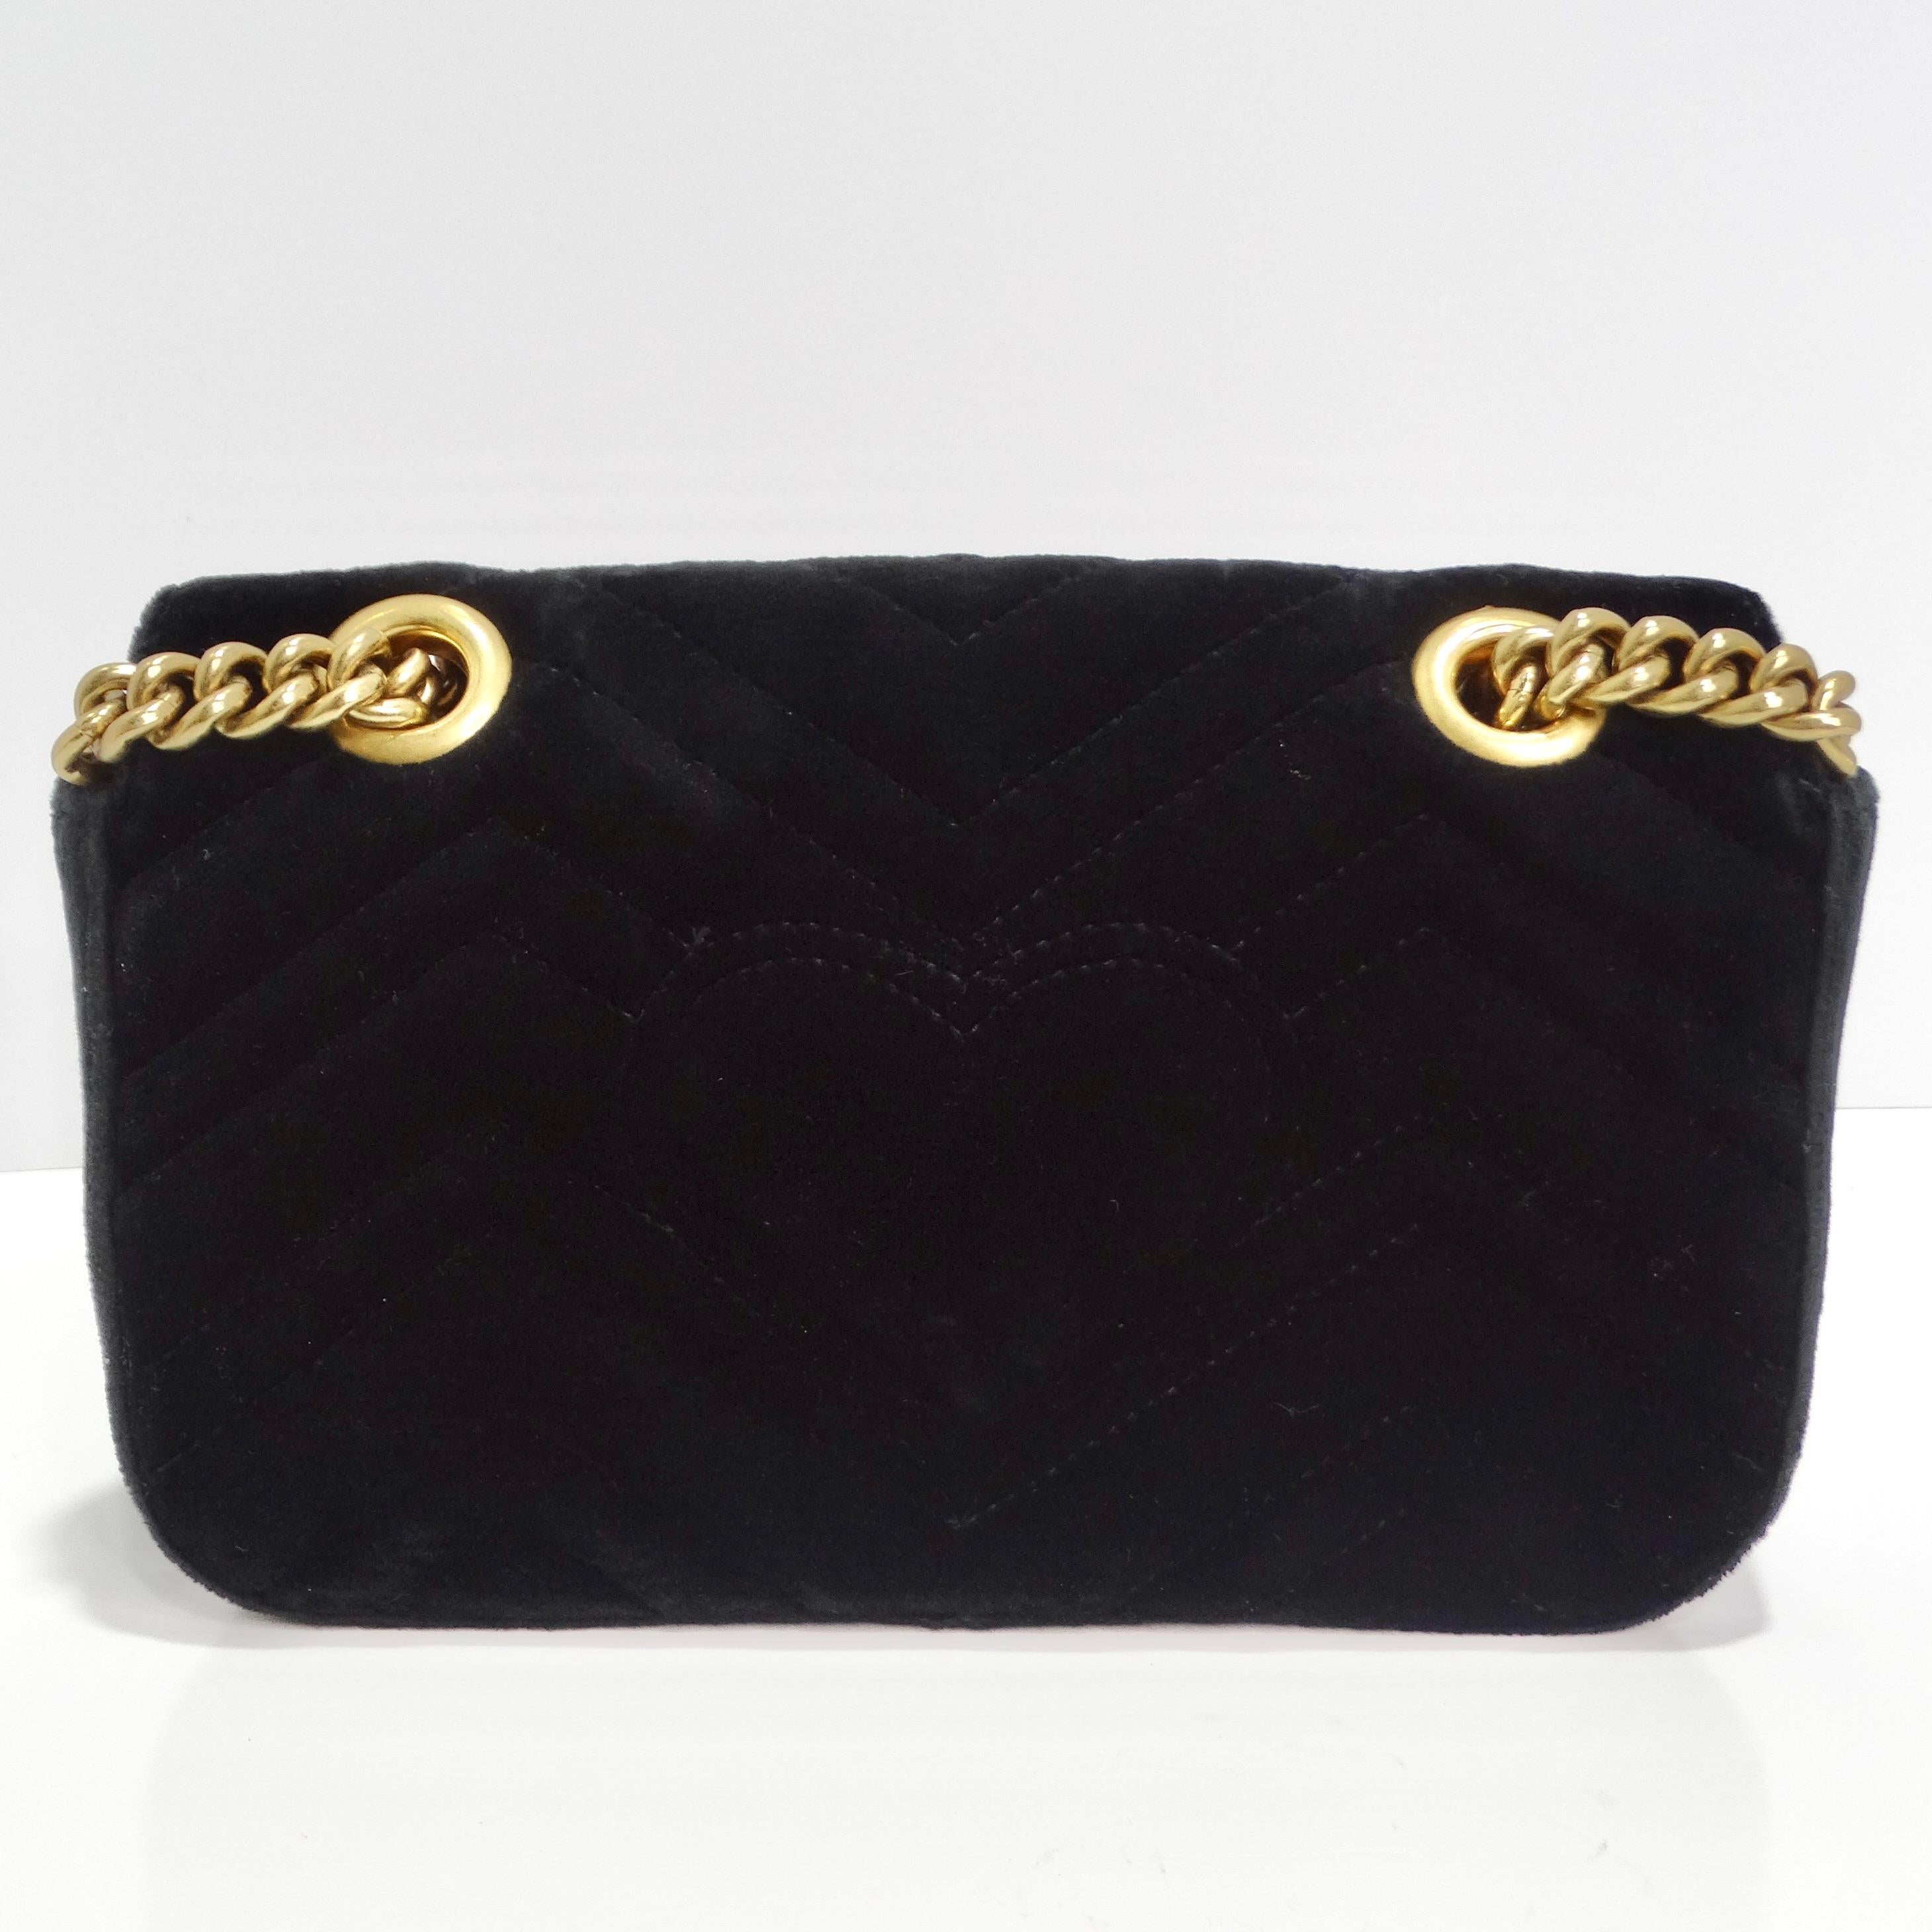 Gucci Velvet Matelasse Mini GG Marmont Shoulder Bag Black In Excellent Condition For Sale In Scottsdale, AZ